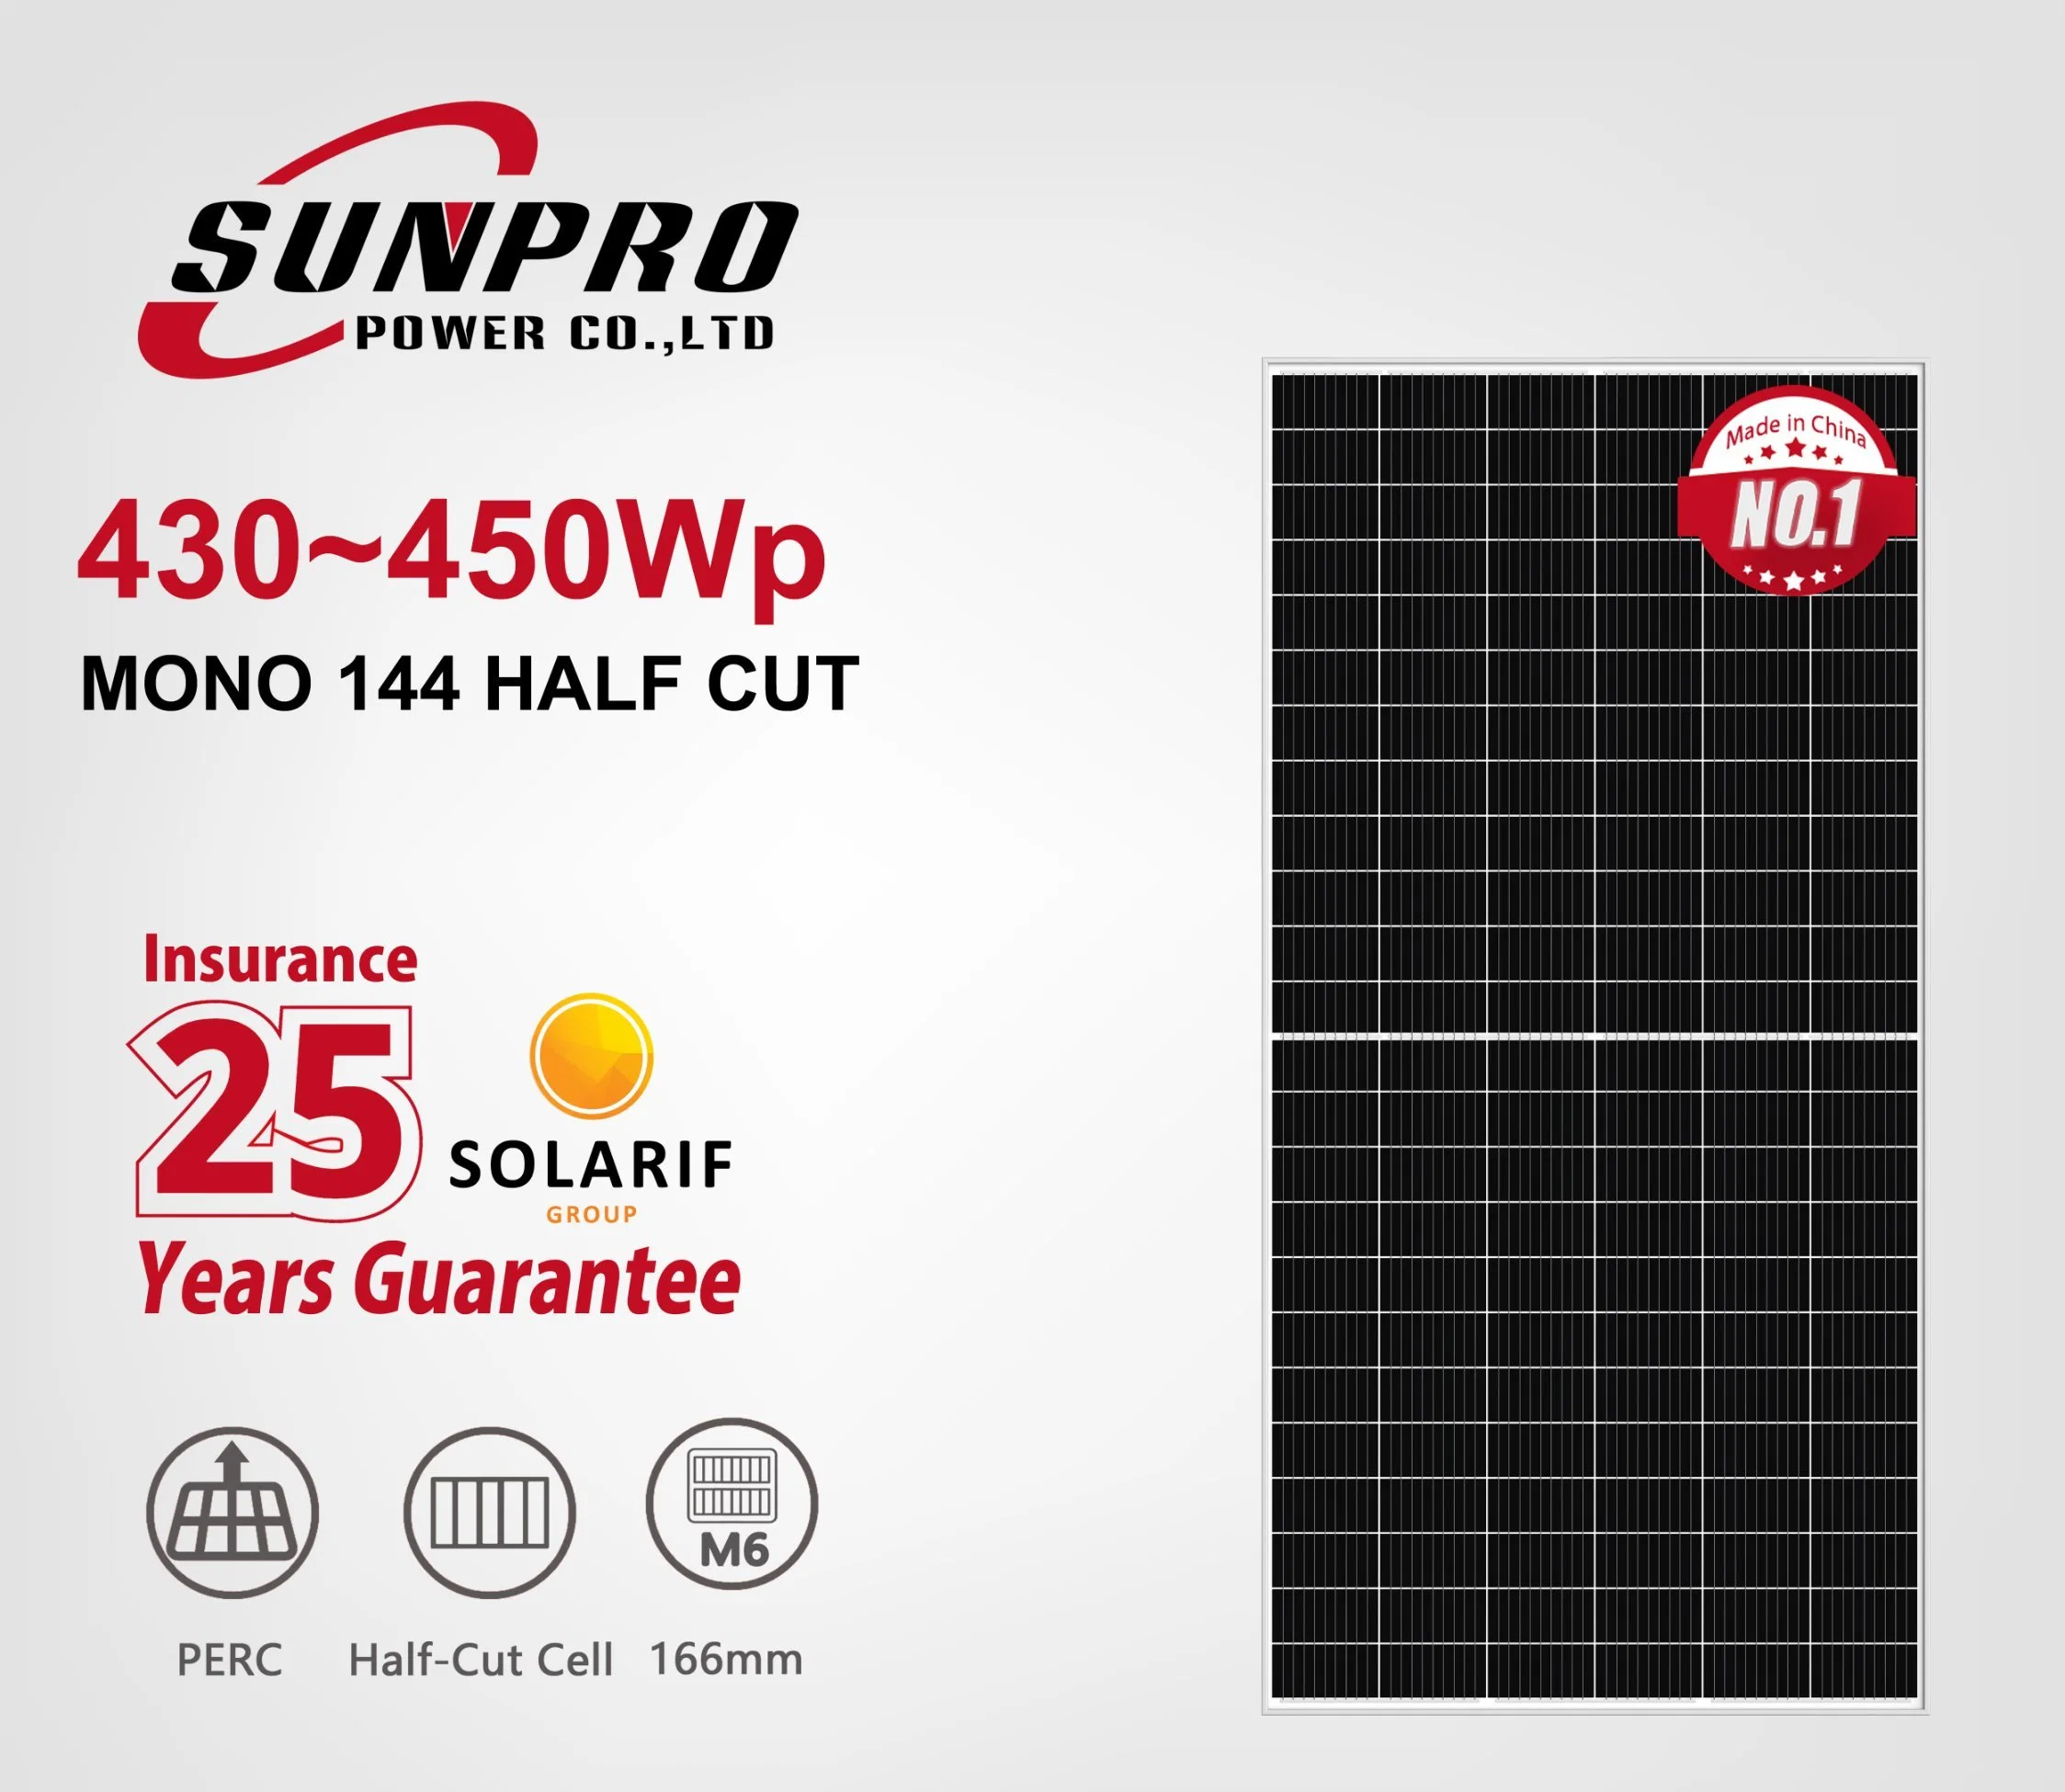 Sunpro Power 440W Halbschnitt-Solarmodul